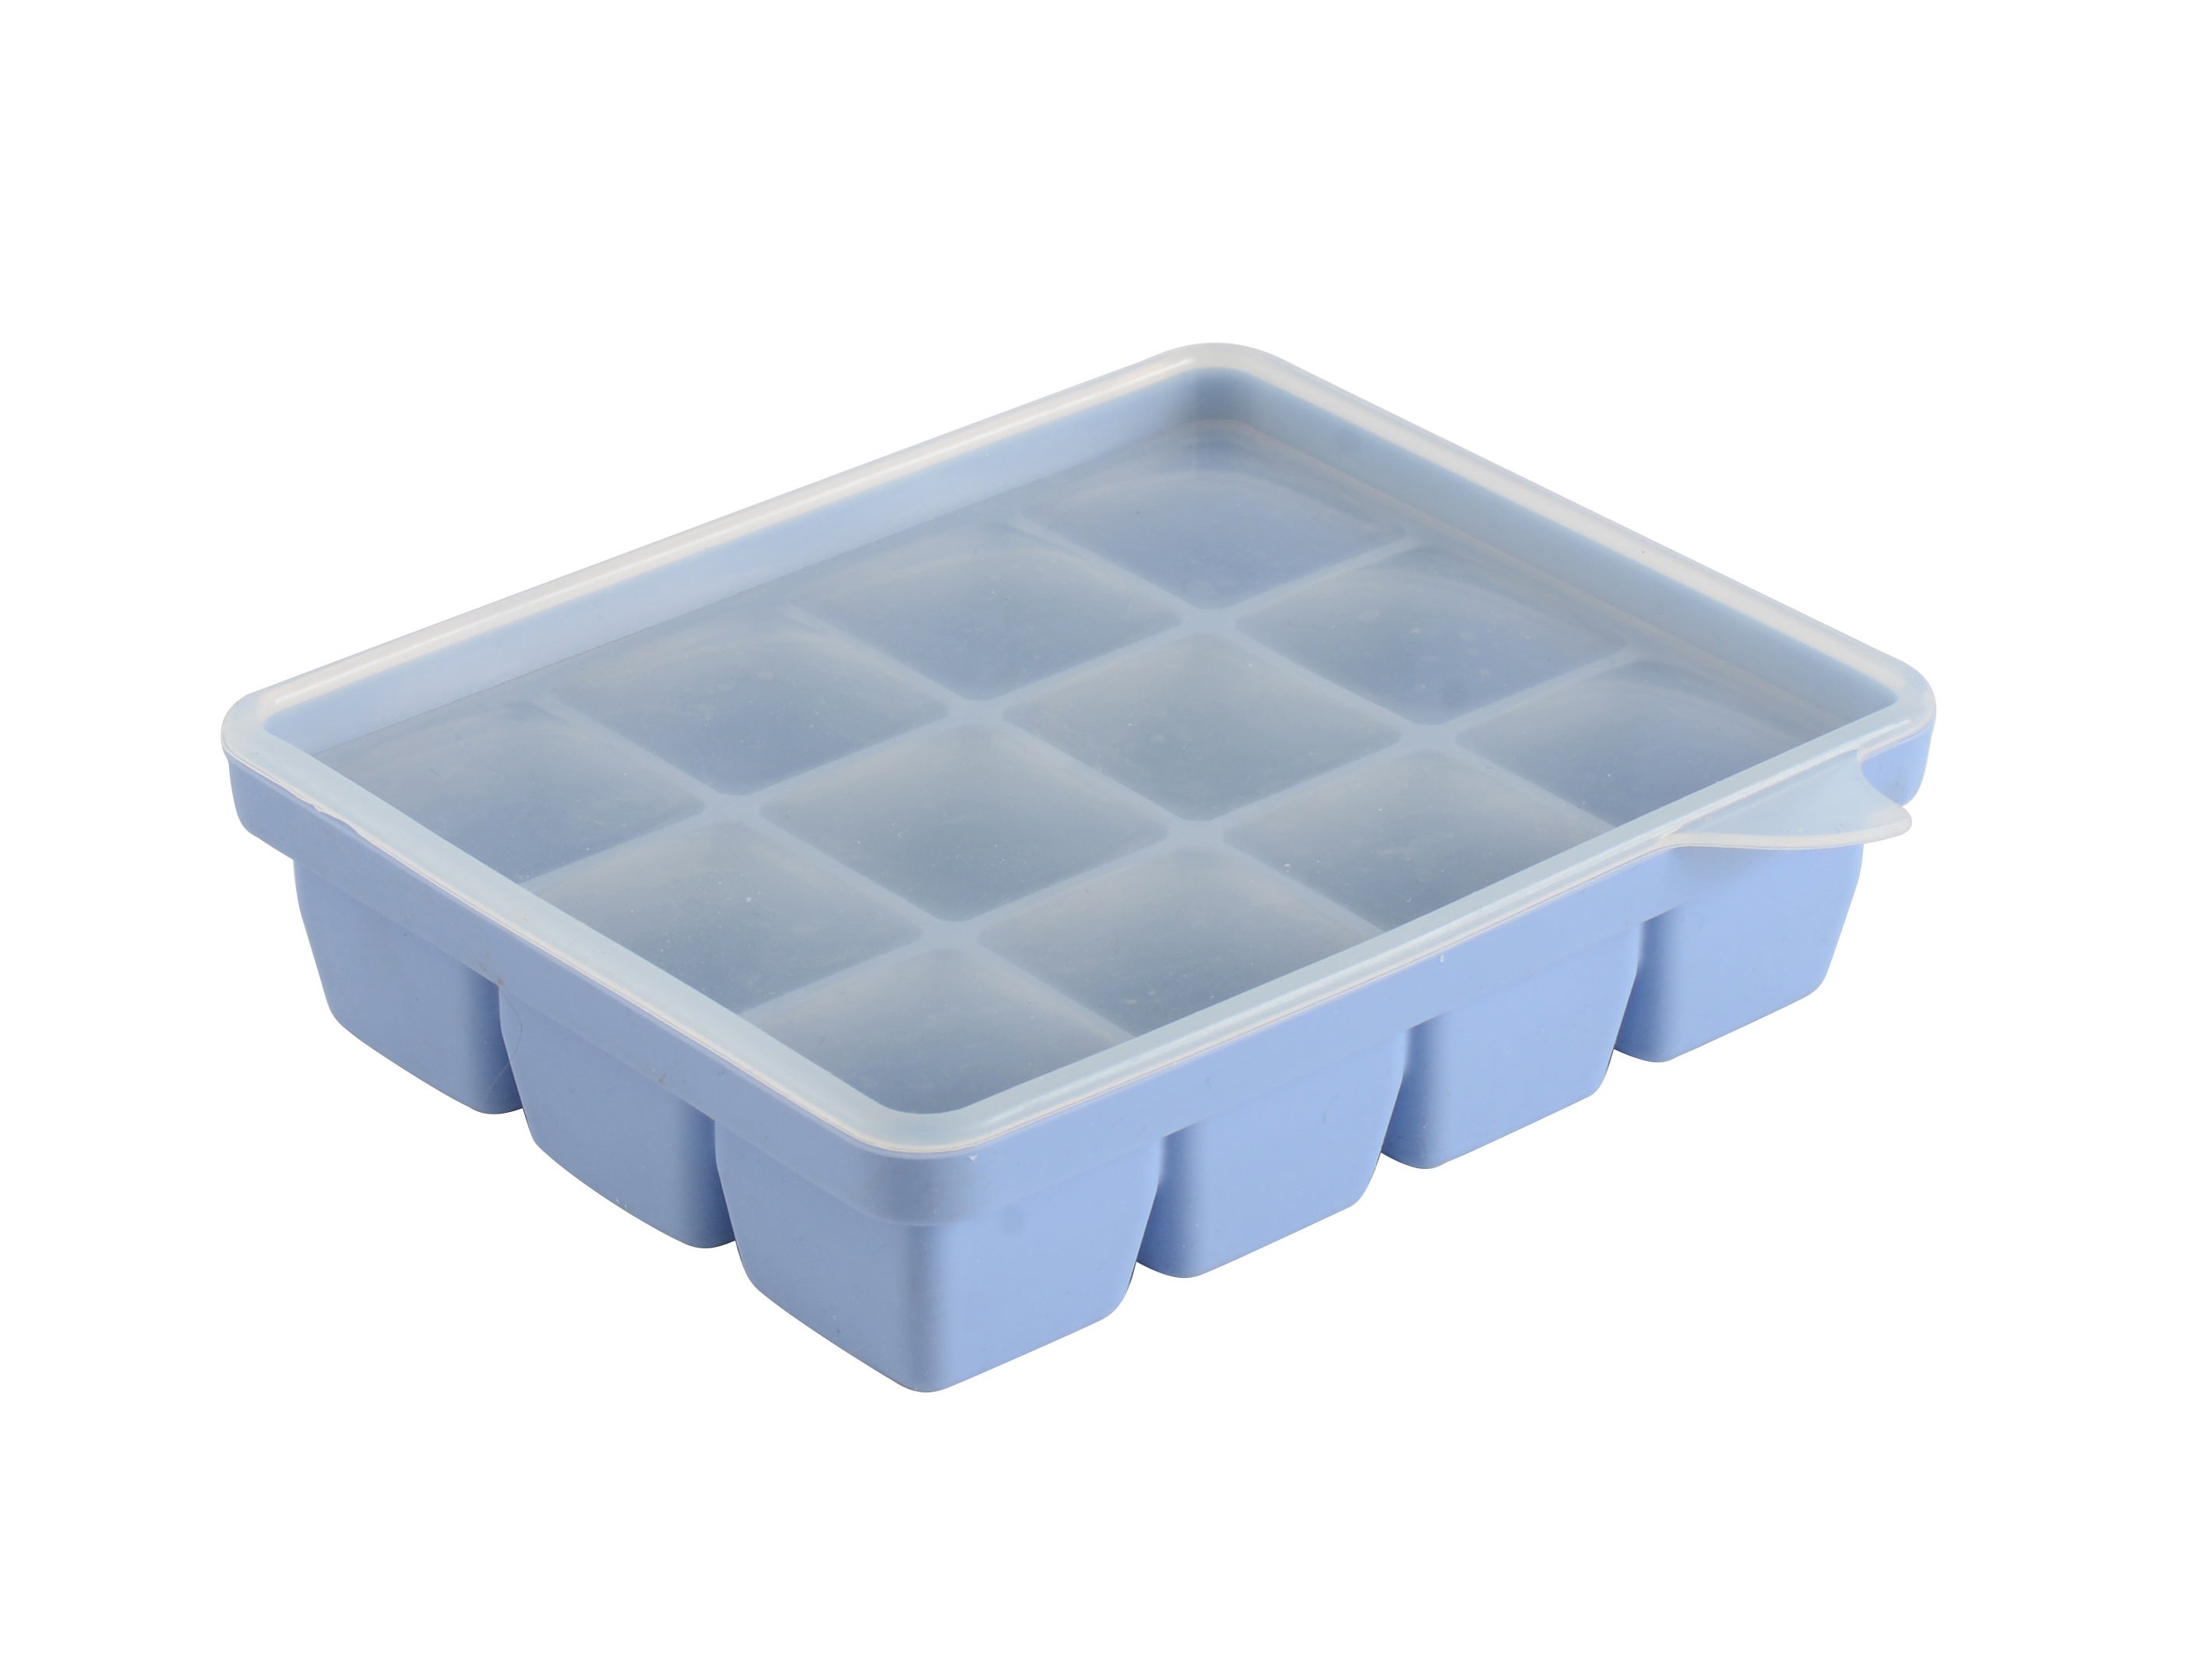 Handy Gourmet JB7764BLU Ice Cube Trays One Size Fits All Blue 